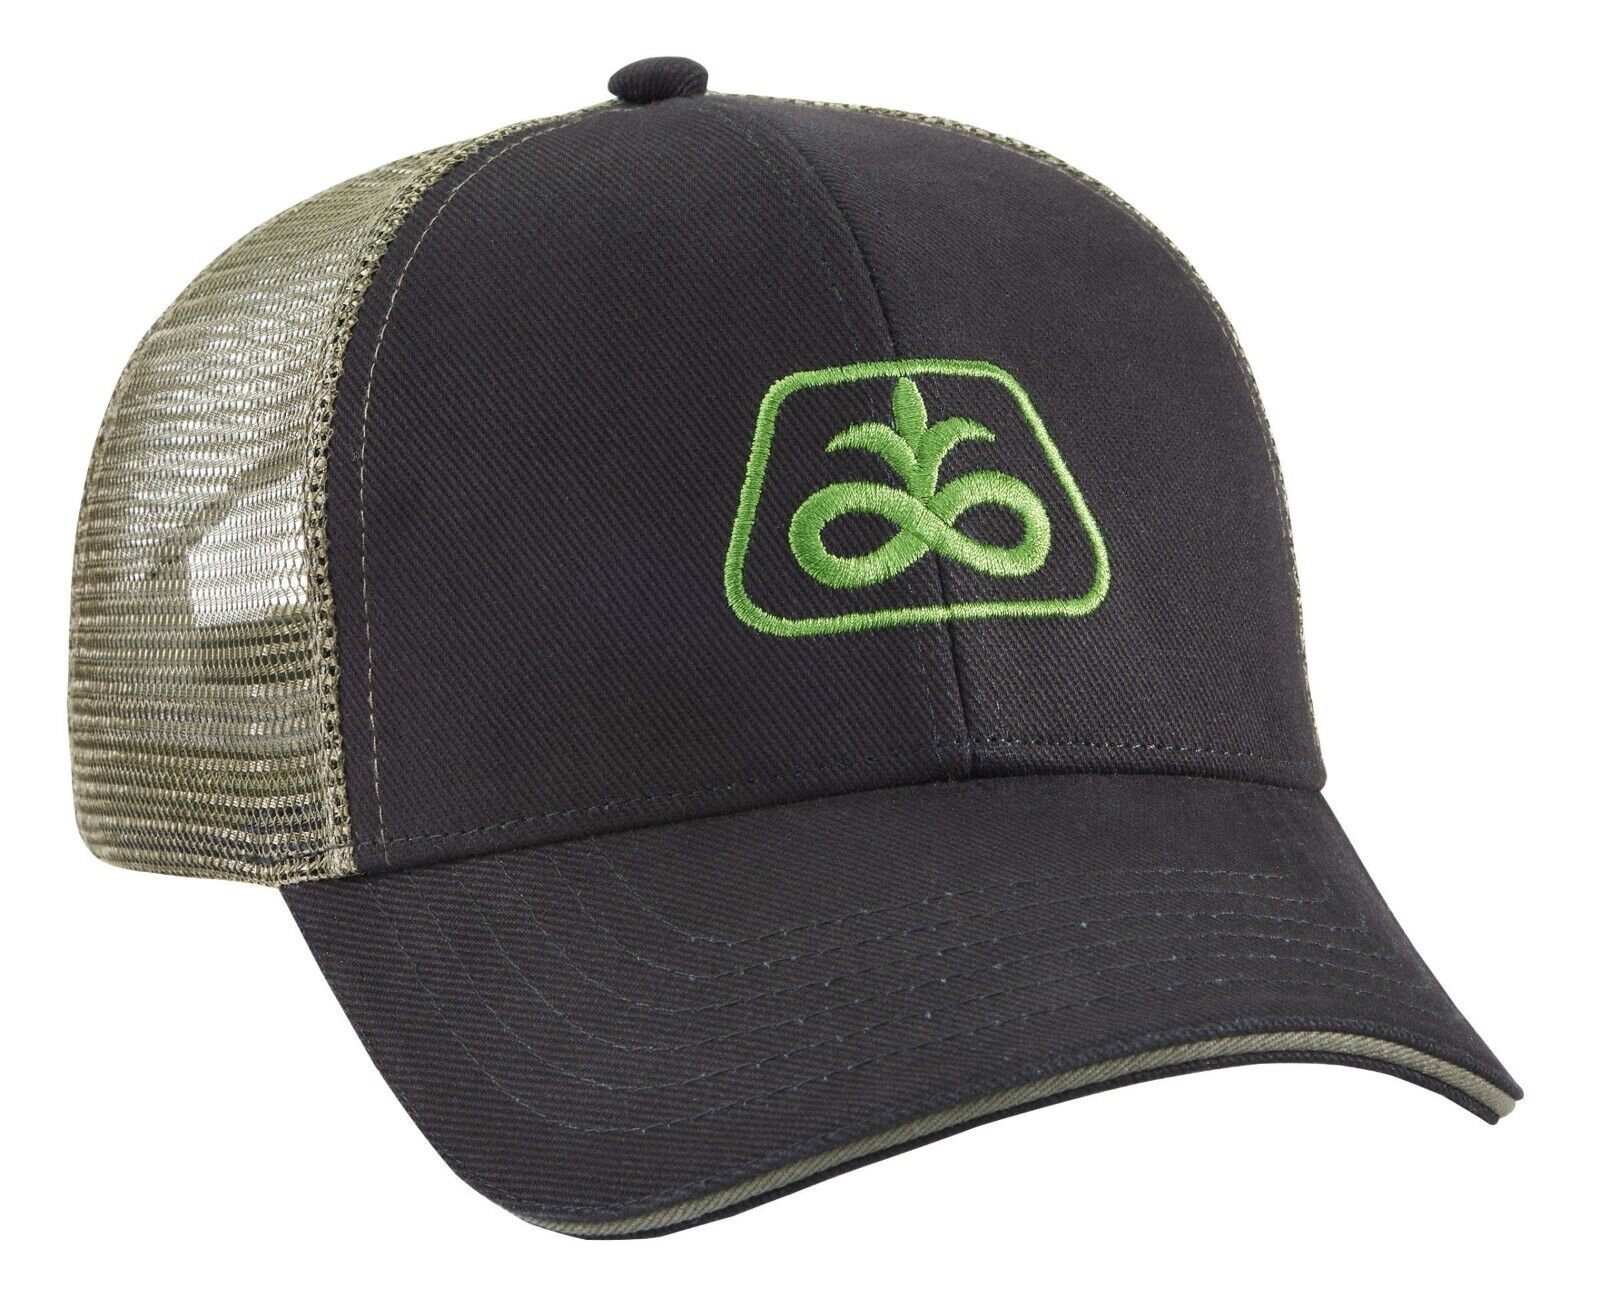 PIONEER SEED *BLACK & OLIVE MESH BACK* Trademark Logo CAP HAT *BRAND NEW* PS15